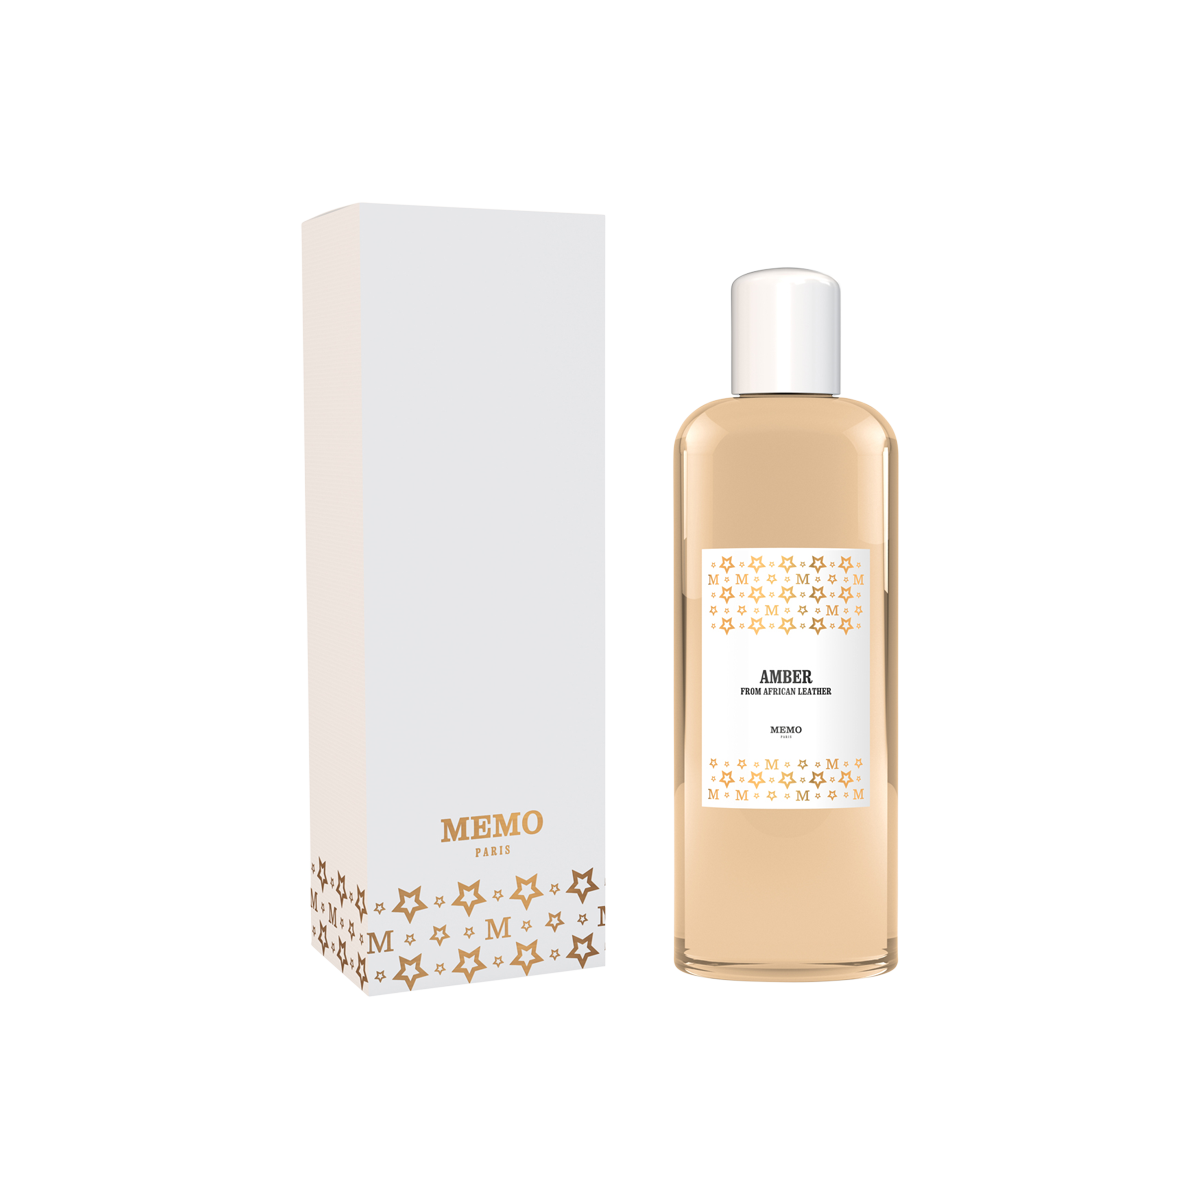 Memo Paris - Amber Fragrance Diffuser Refill Box